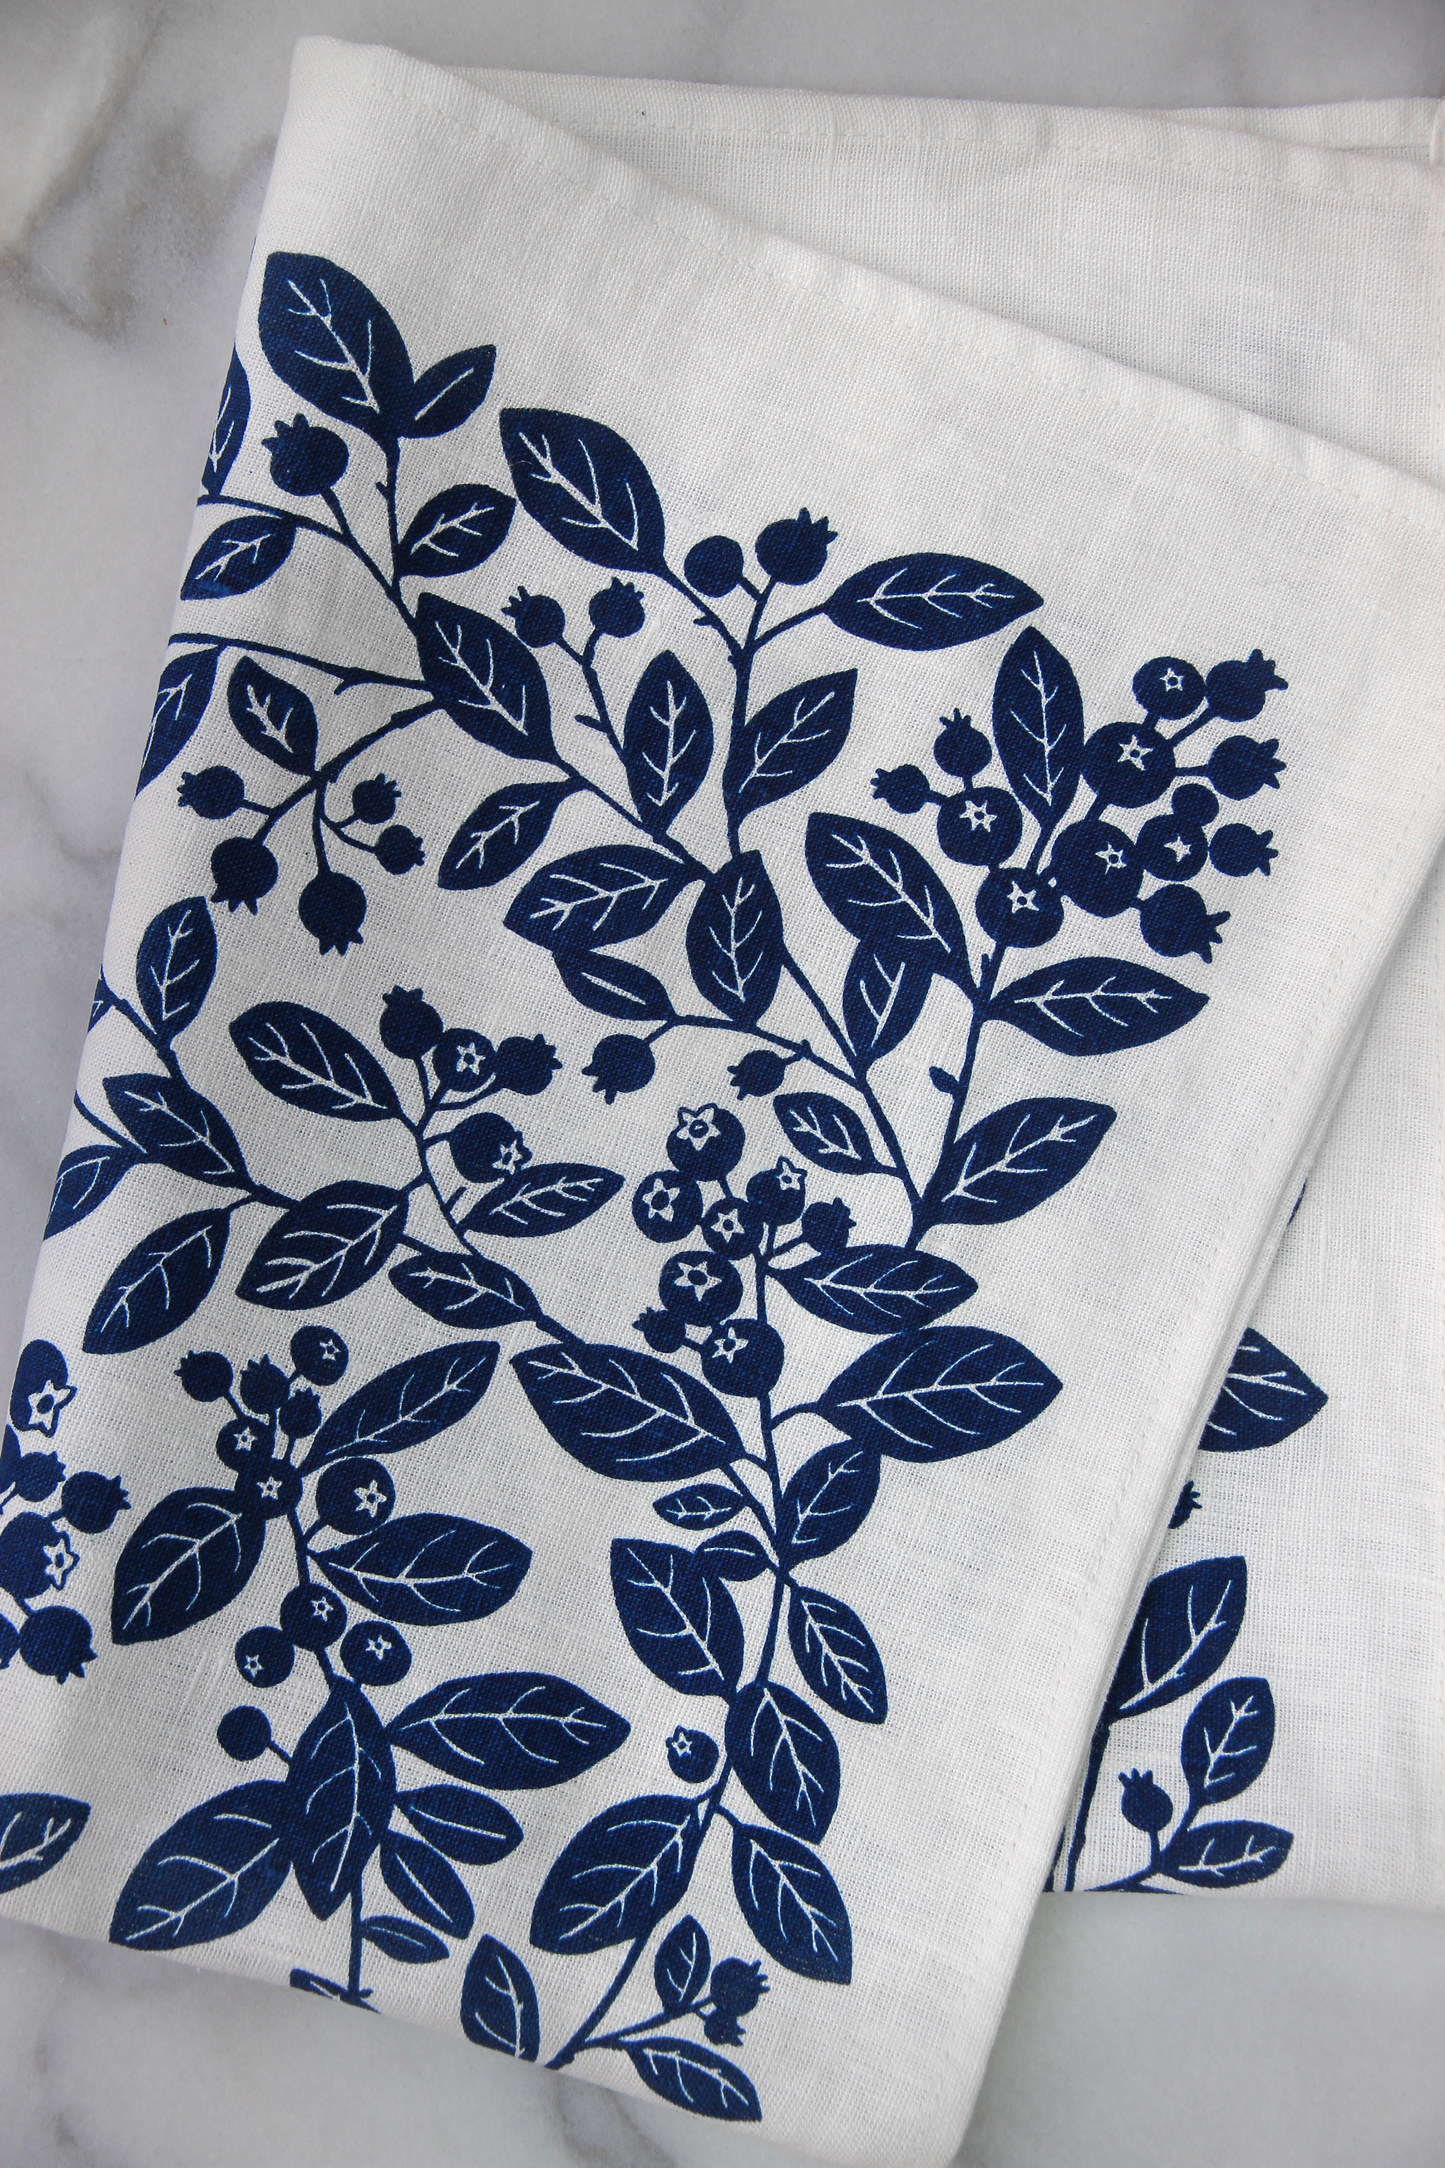 Blueberry Kitchen Towel in Navy on White Linen